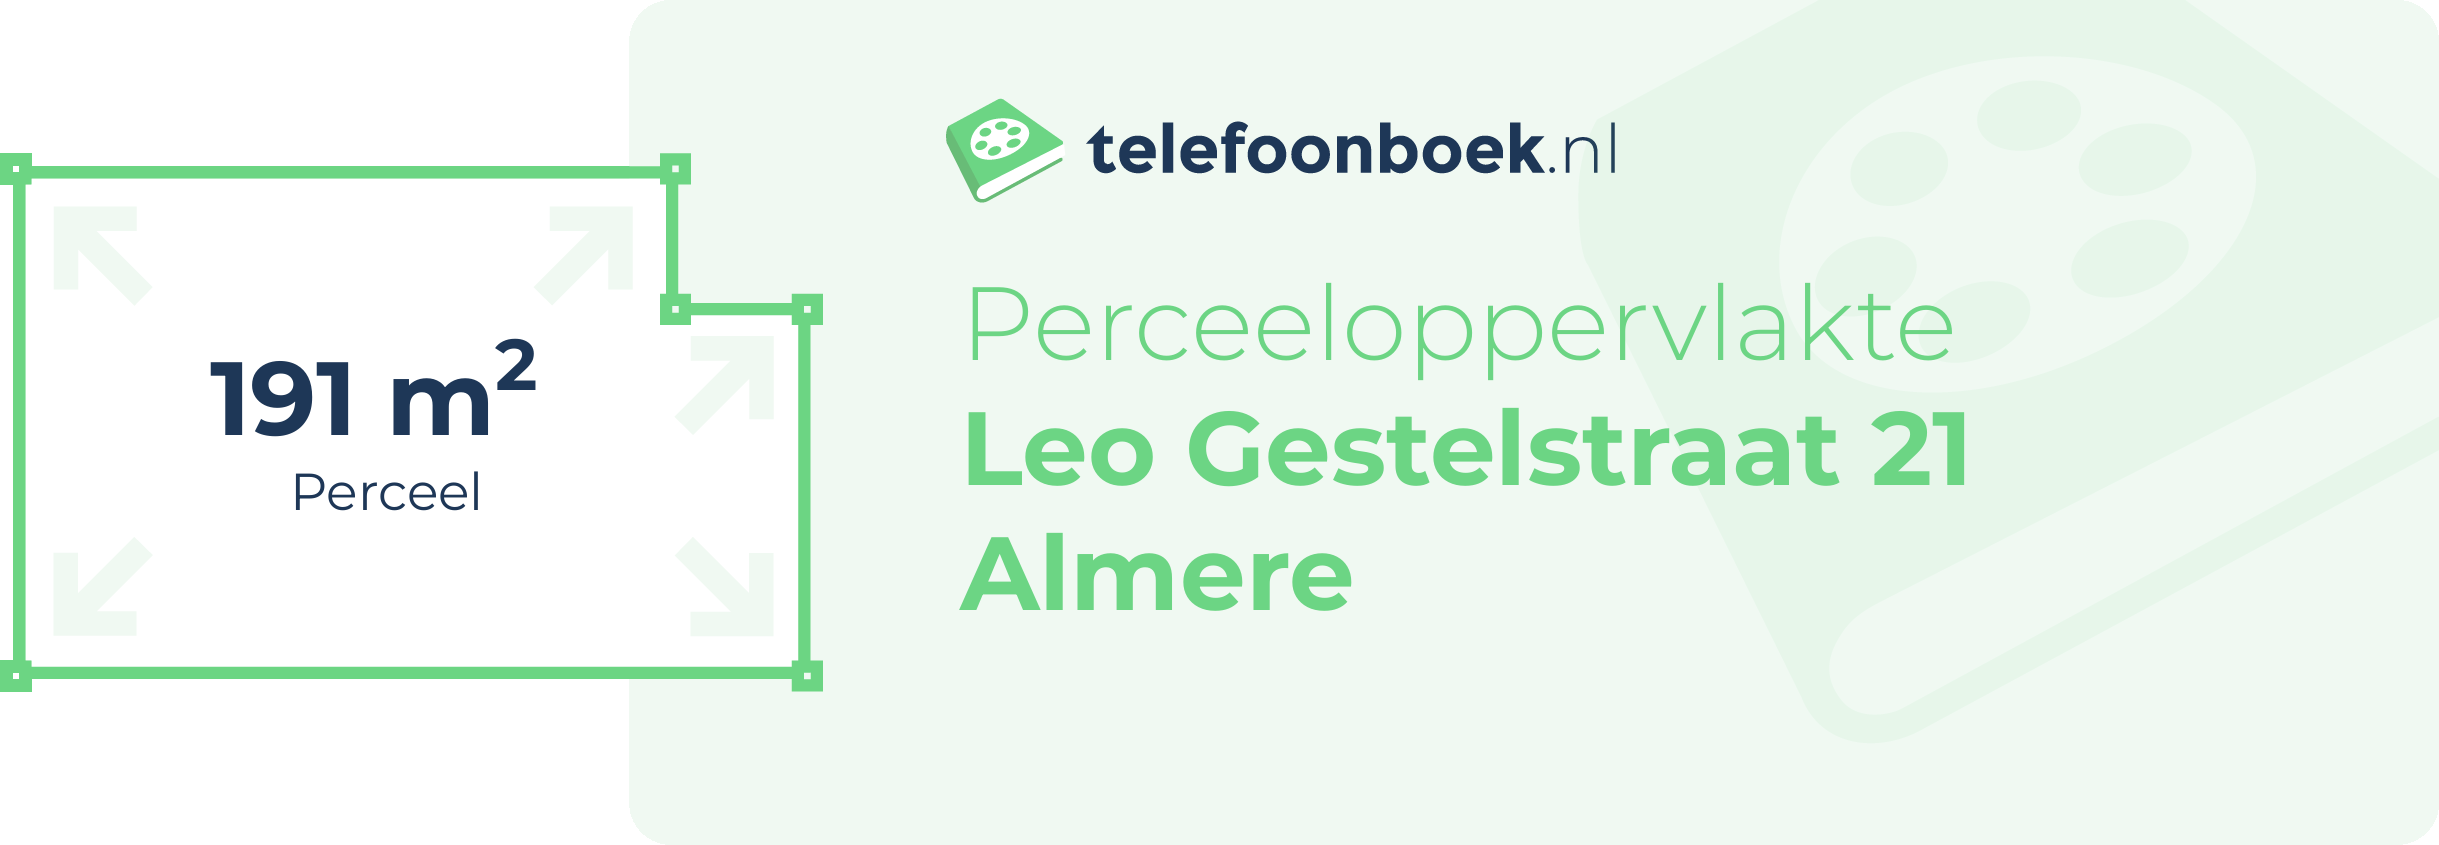 Perceeloppervlakte Leo Gestelstraat 21 Almere